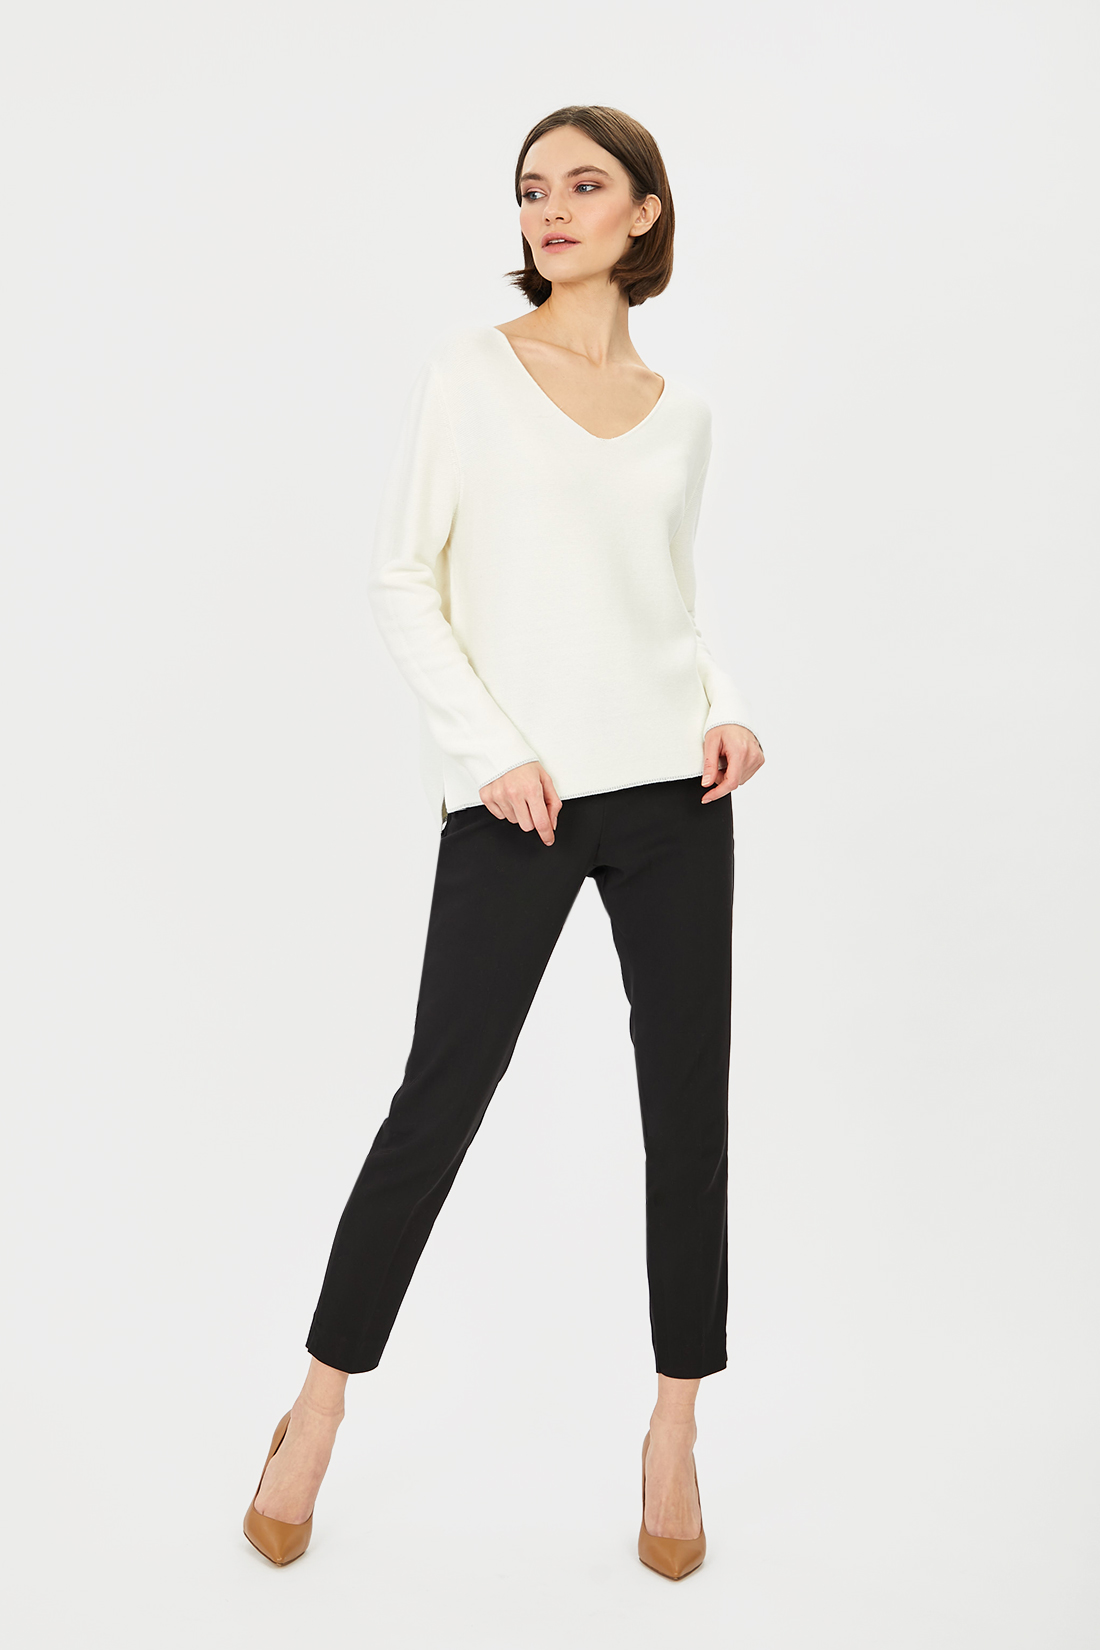 Пуловер с мерцающей отделкой (арт. baon B131028), размер XL, цвет белый Пуловер с мерцающей отделкой (арт. baon B131028) - фото 4